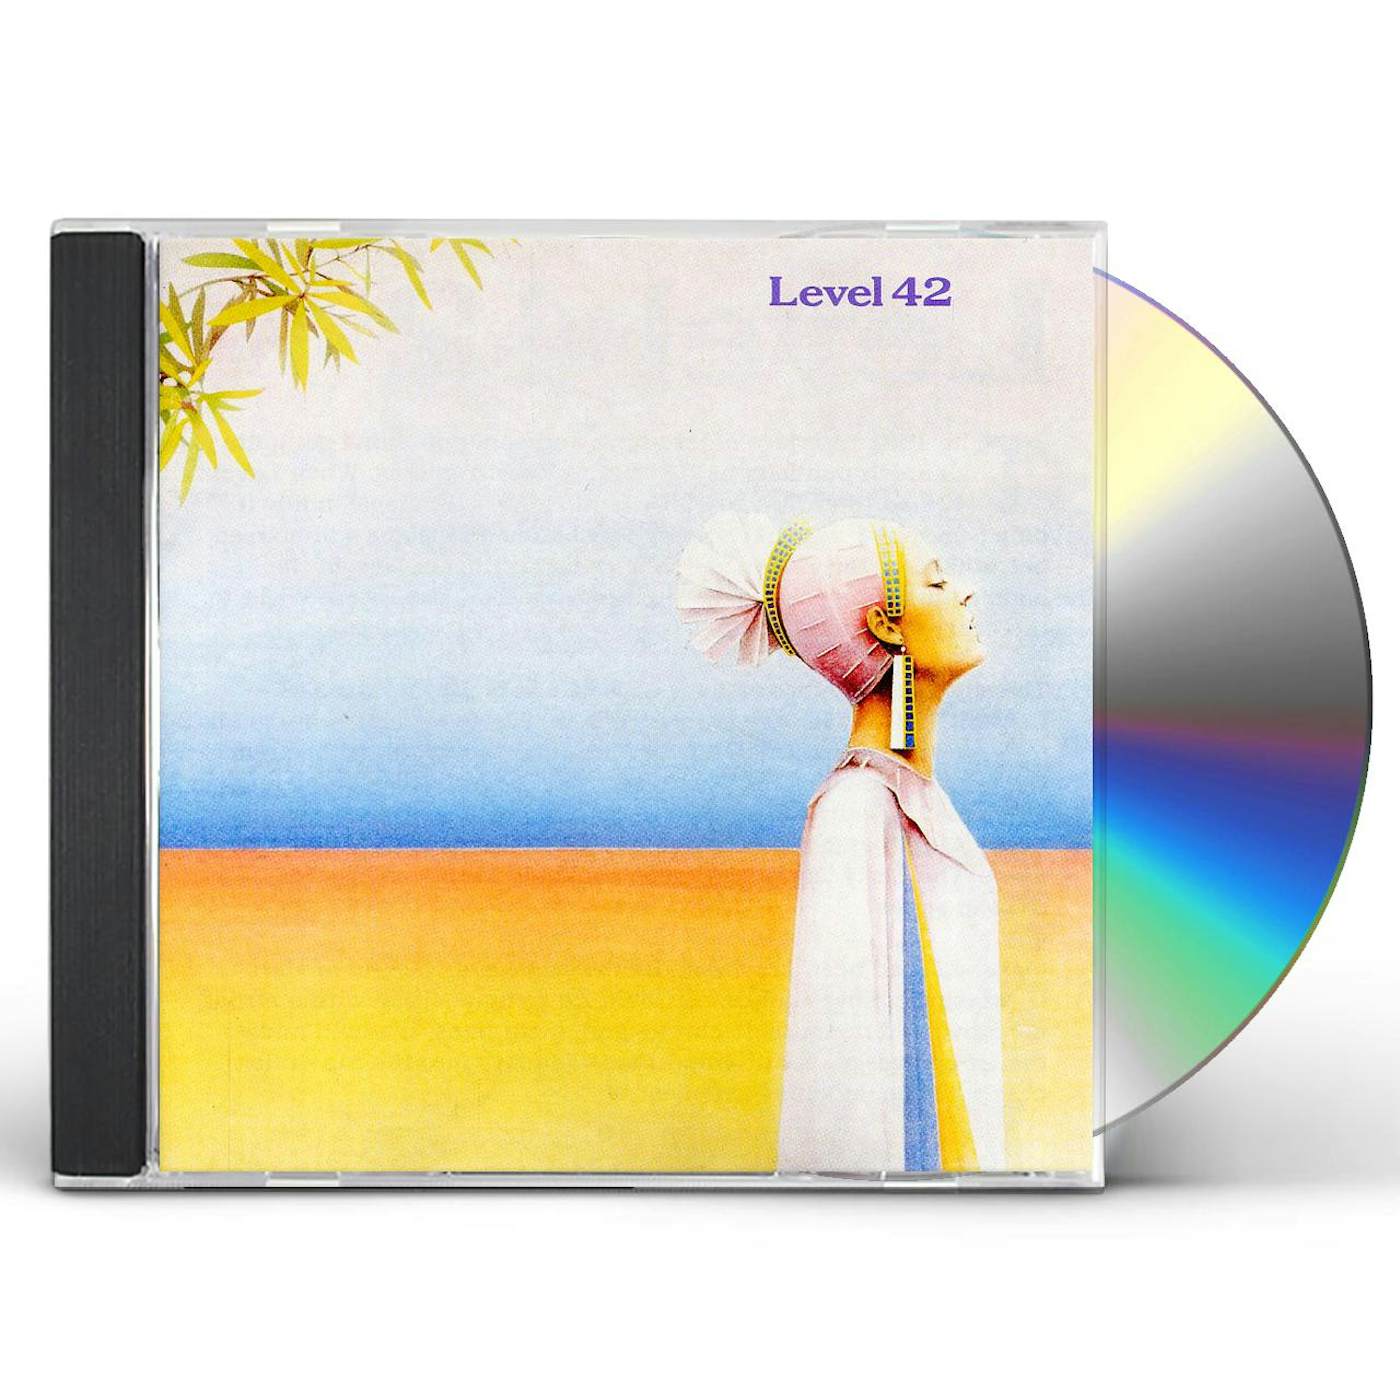 LEVEL 42 CD